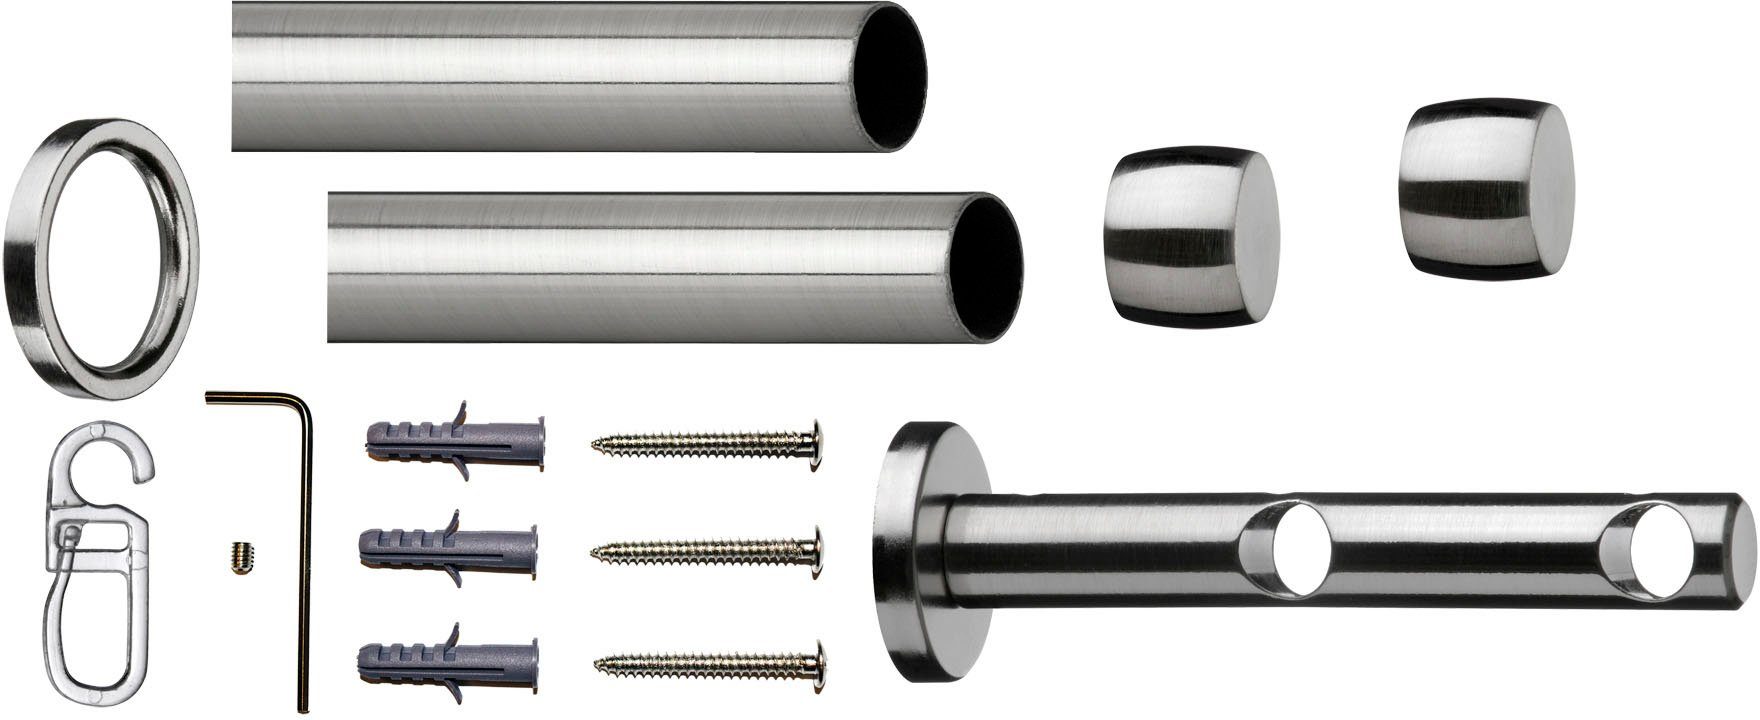 Gardinenstange Andrax, indeko, Ø 12 mm, 2-läufig, Fixmaß, verschraubt, Stahl,  Komplett-Set inkl. Ringen und Montagematerial | Gardinenstangen